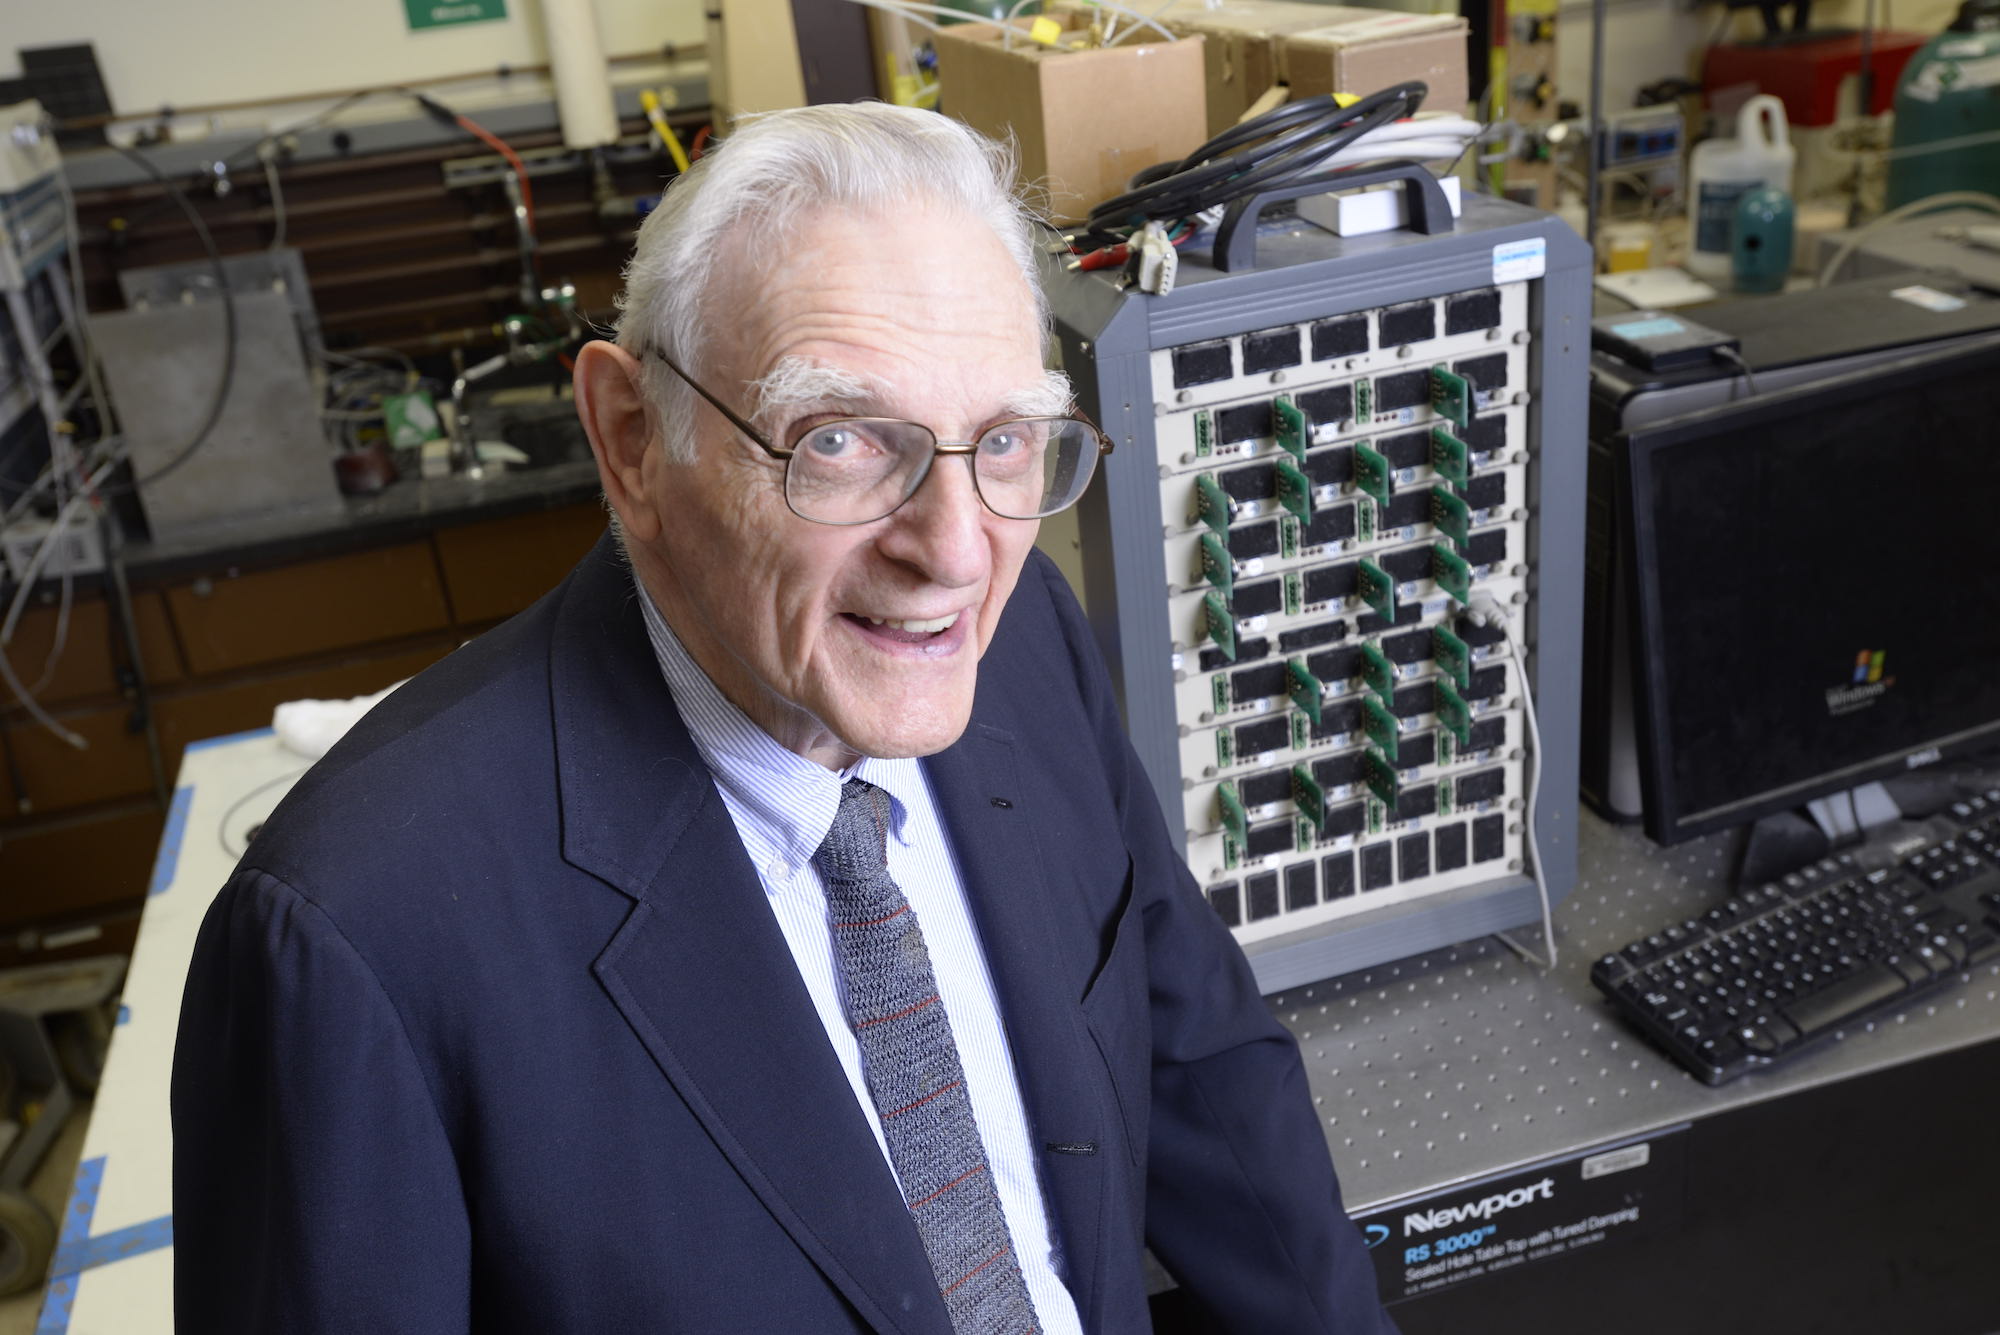 UT Austin TX engineering professor John Goodenough smiling in front of computer